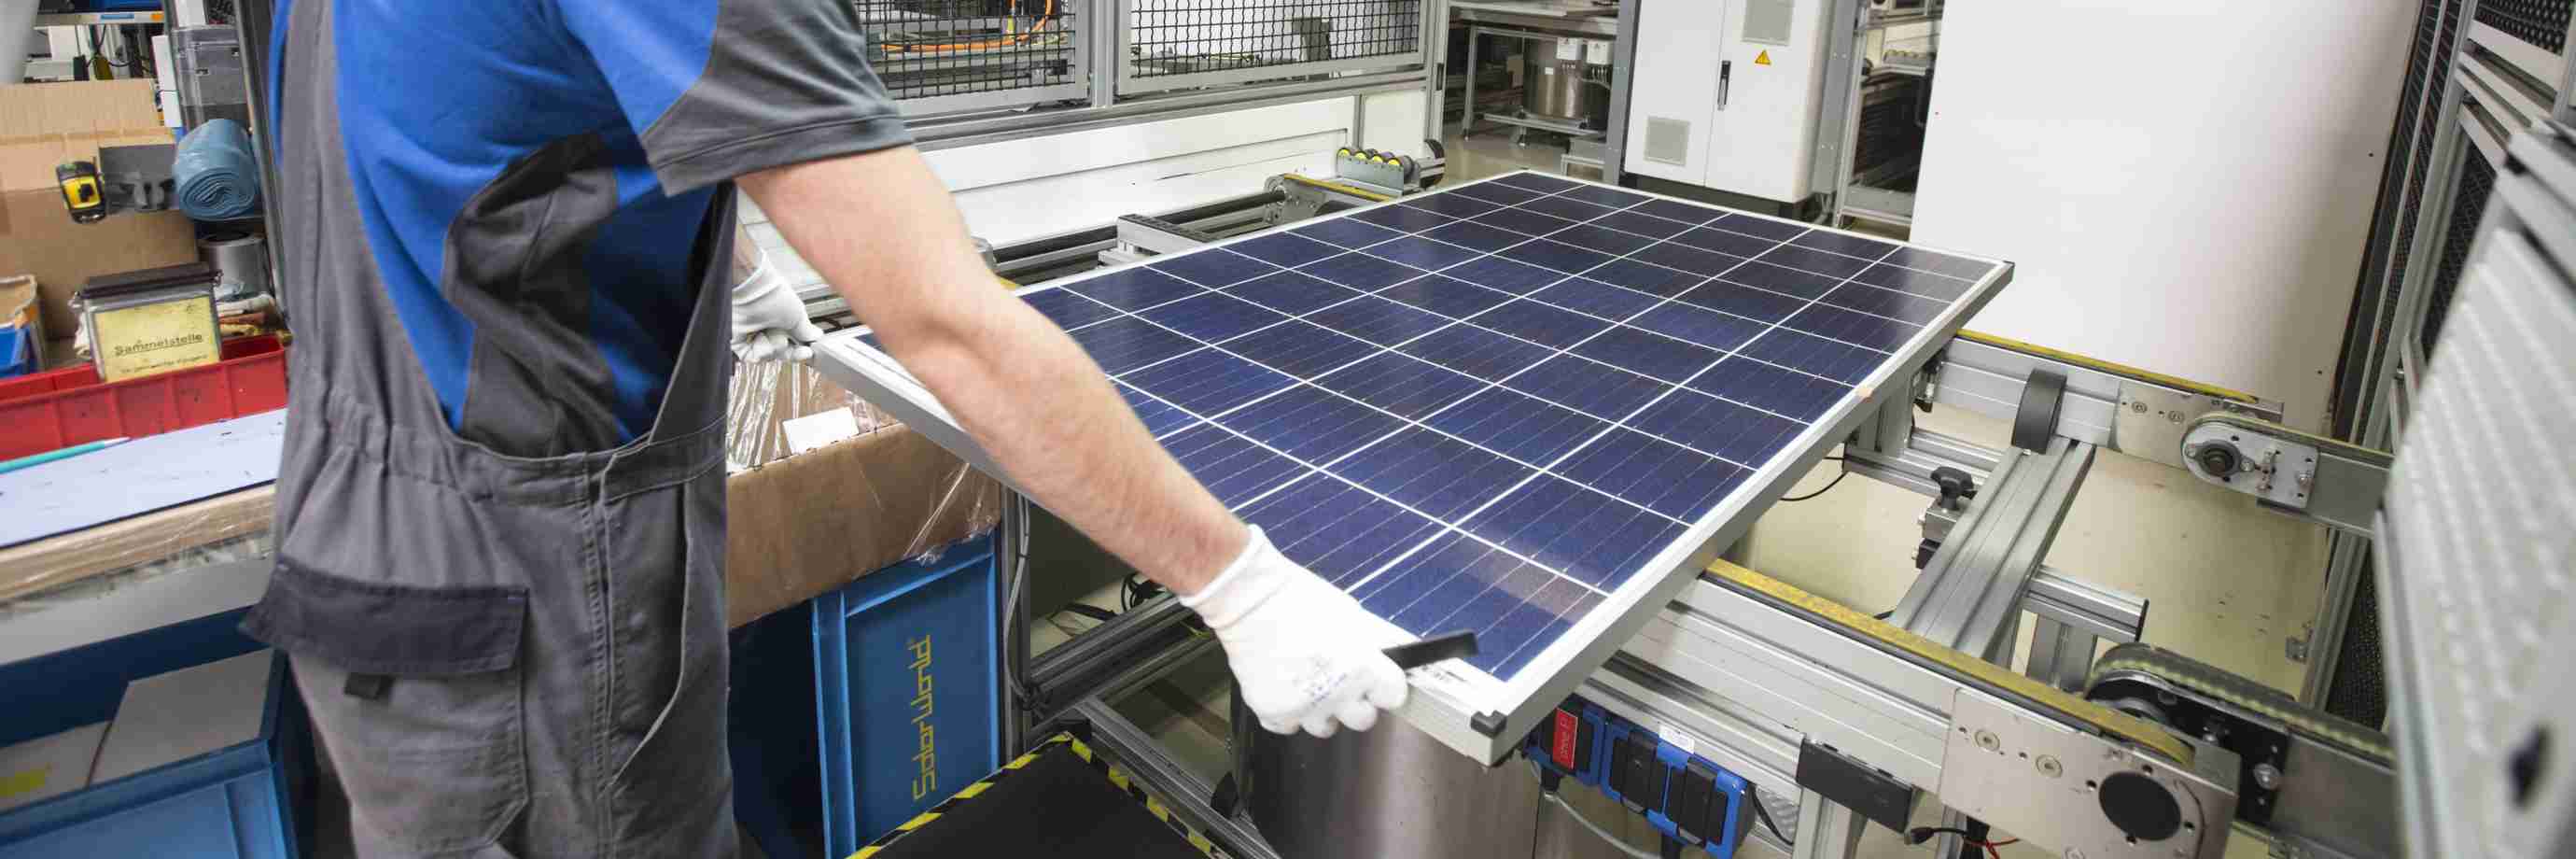 The solar panel making process